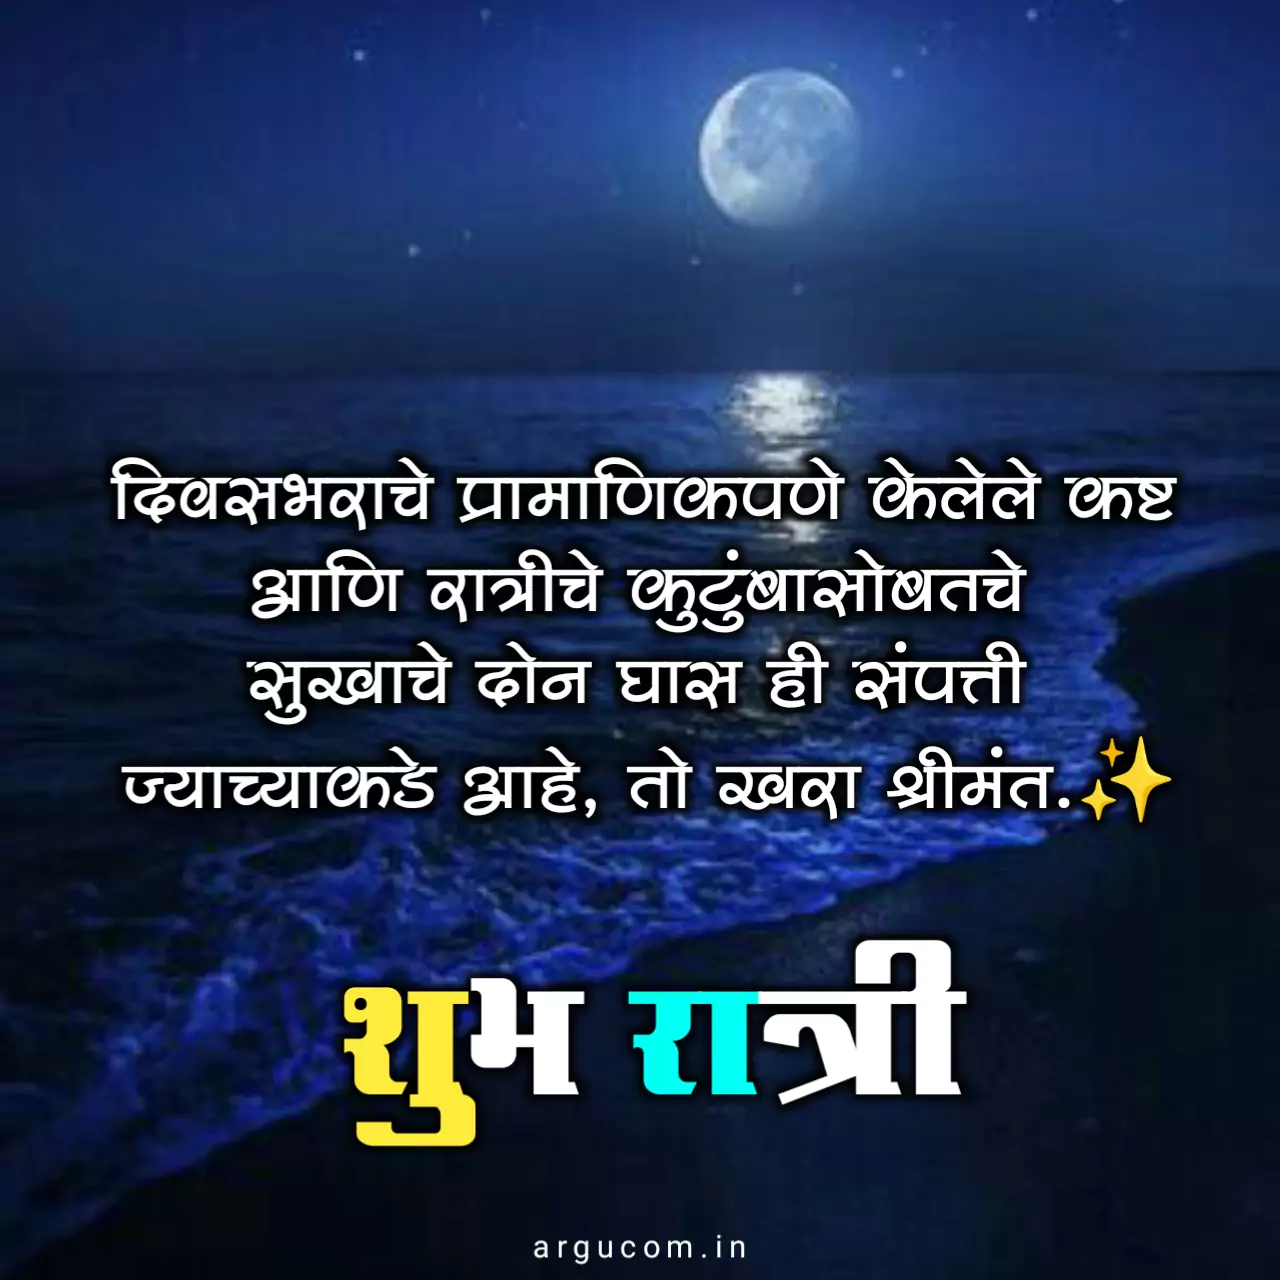 Good night images in marathi